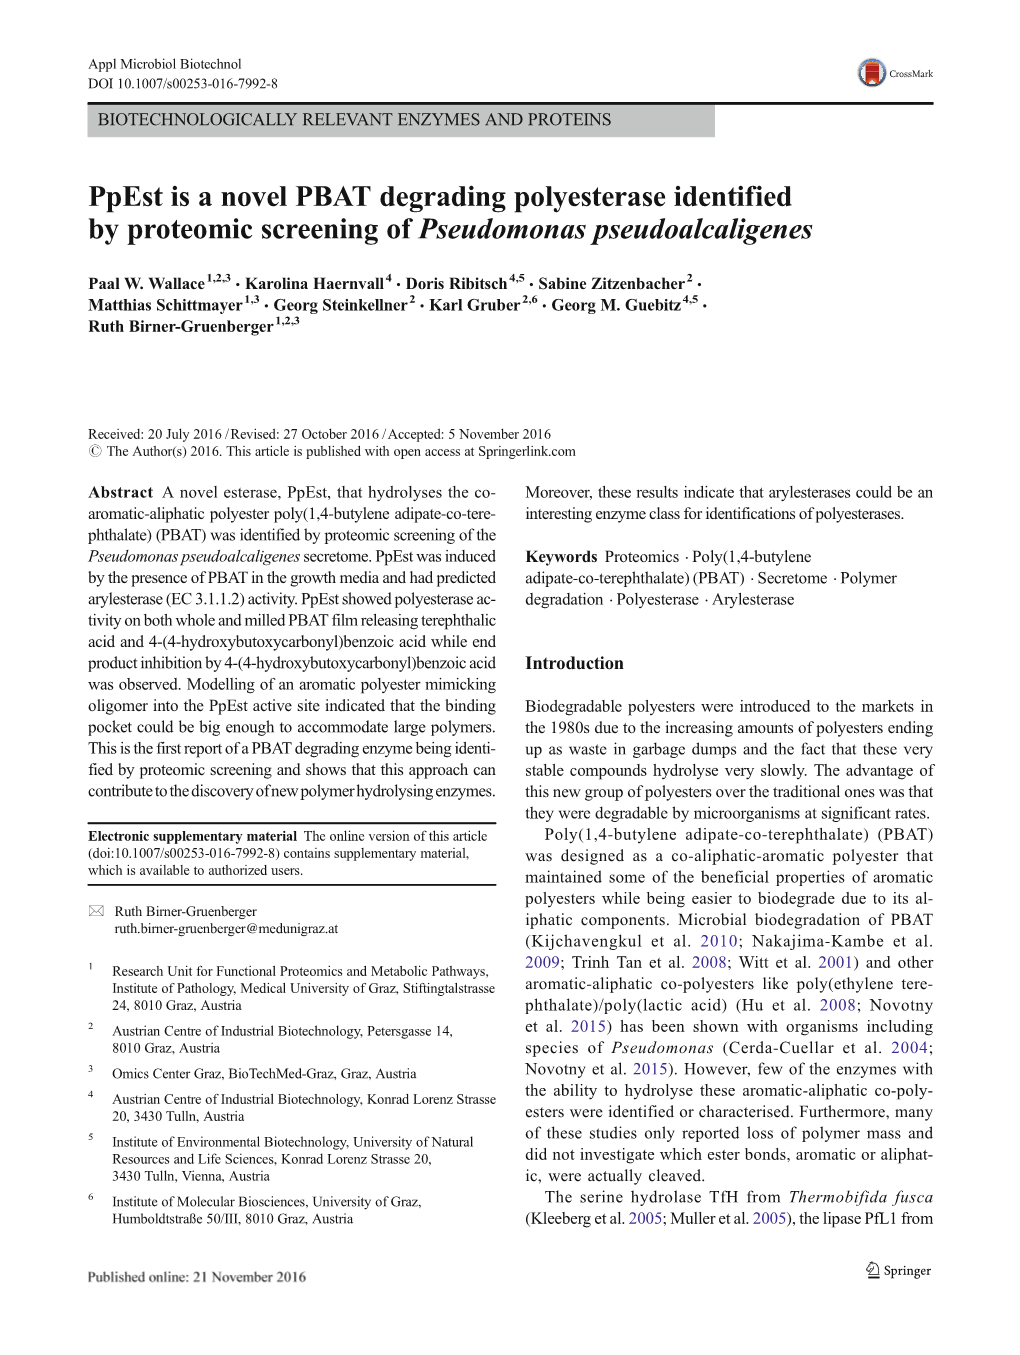 Ppest Is a Novel PBAT Degrading Polyesterase Identified by Proteomic Screening of Pseudomonas Pseudoalcaligenes